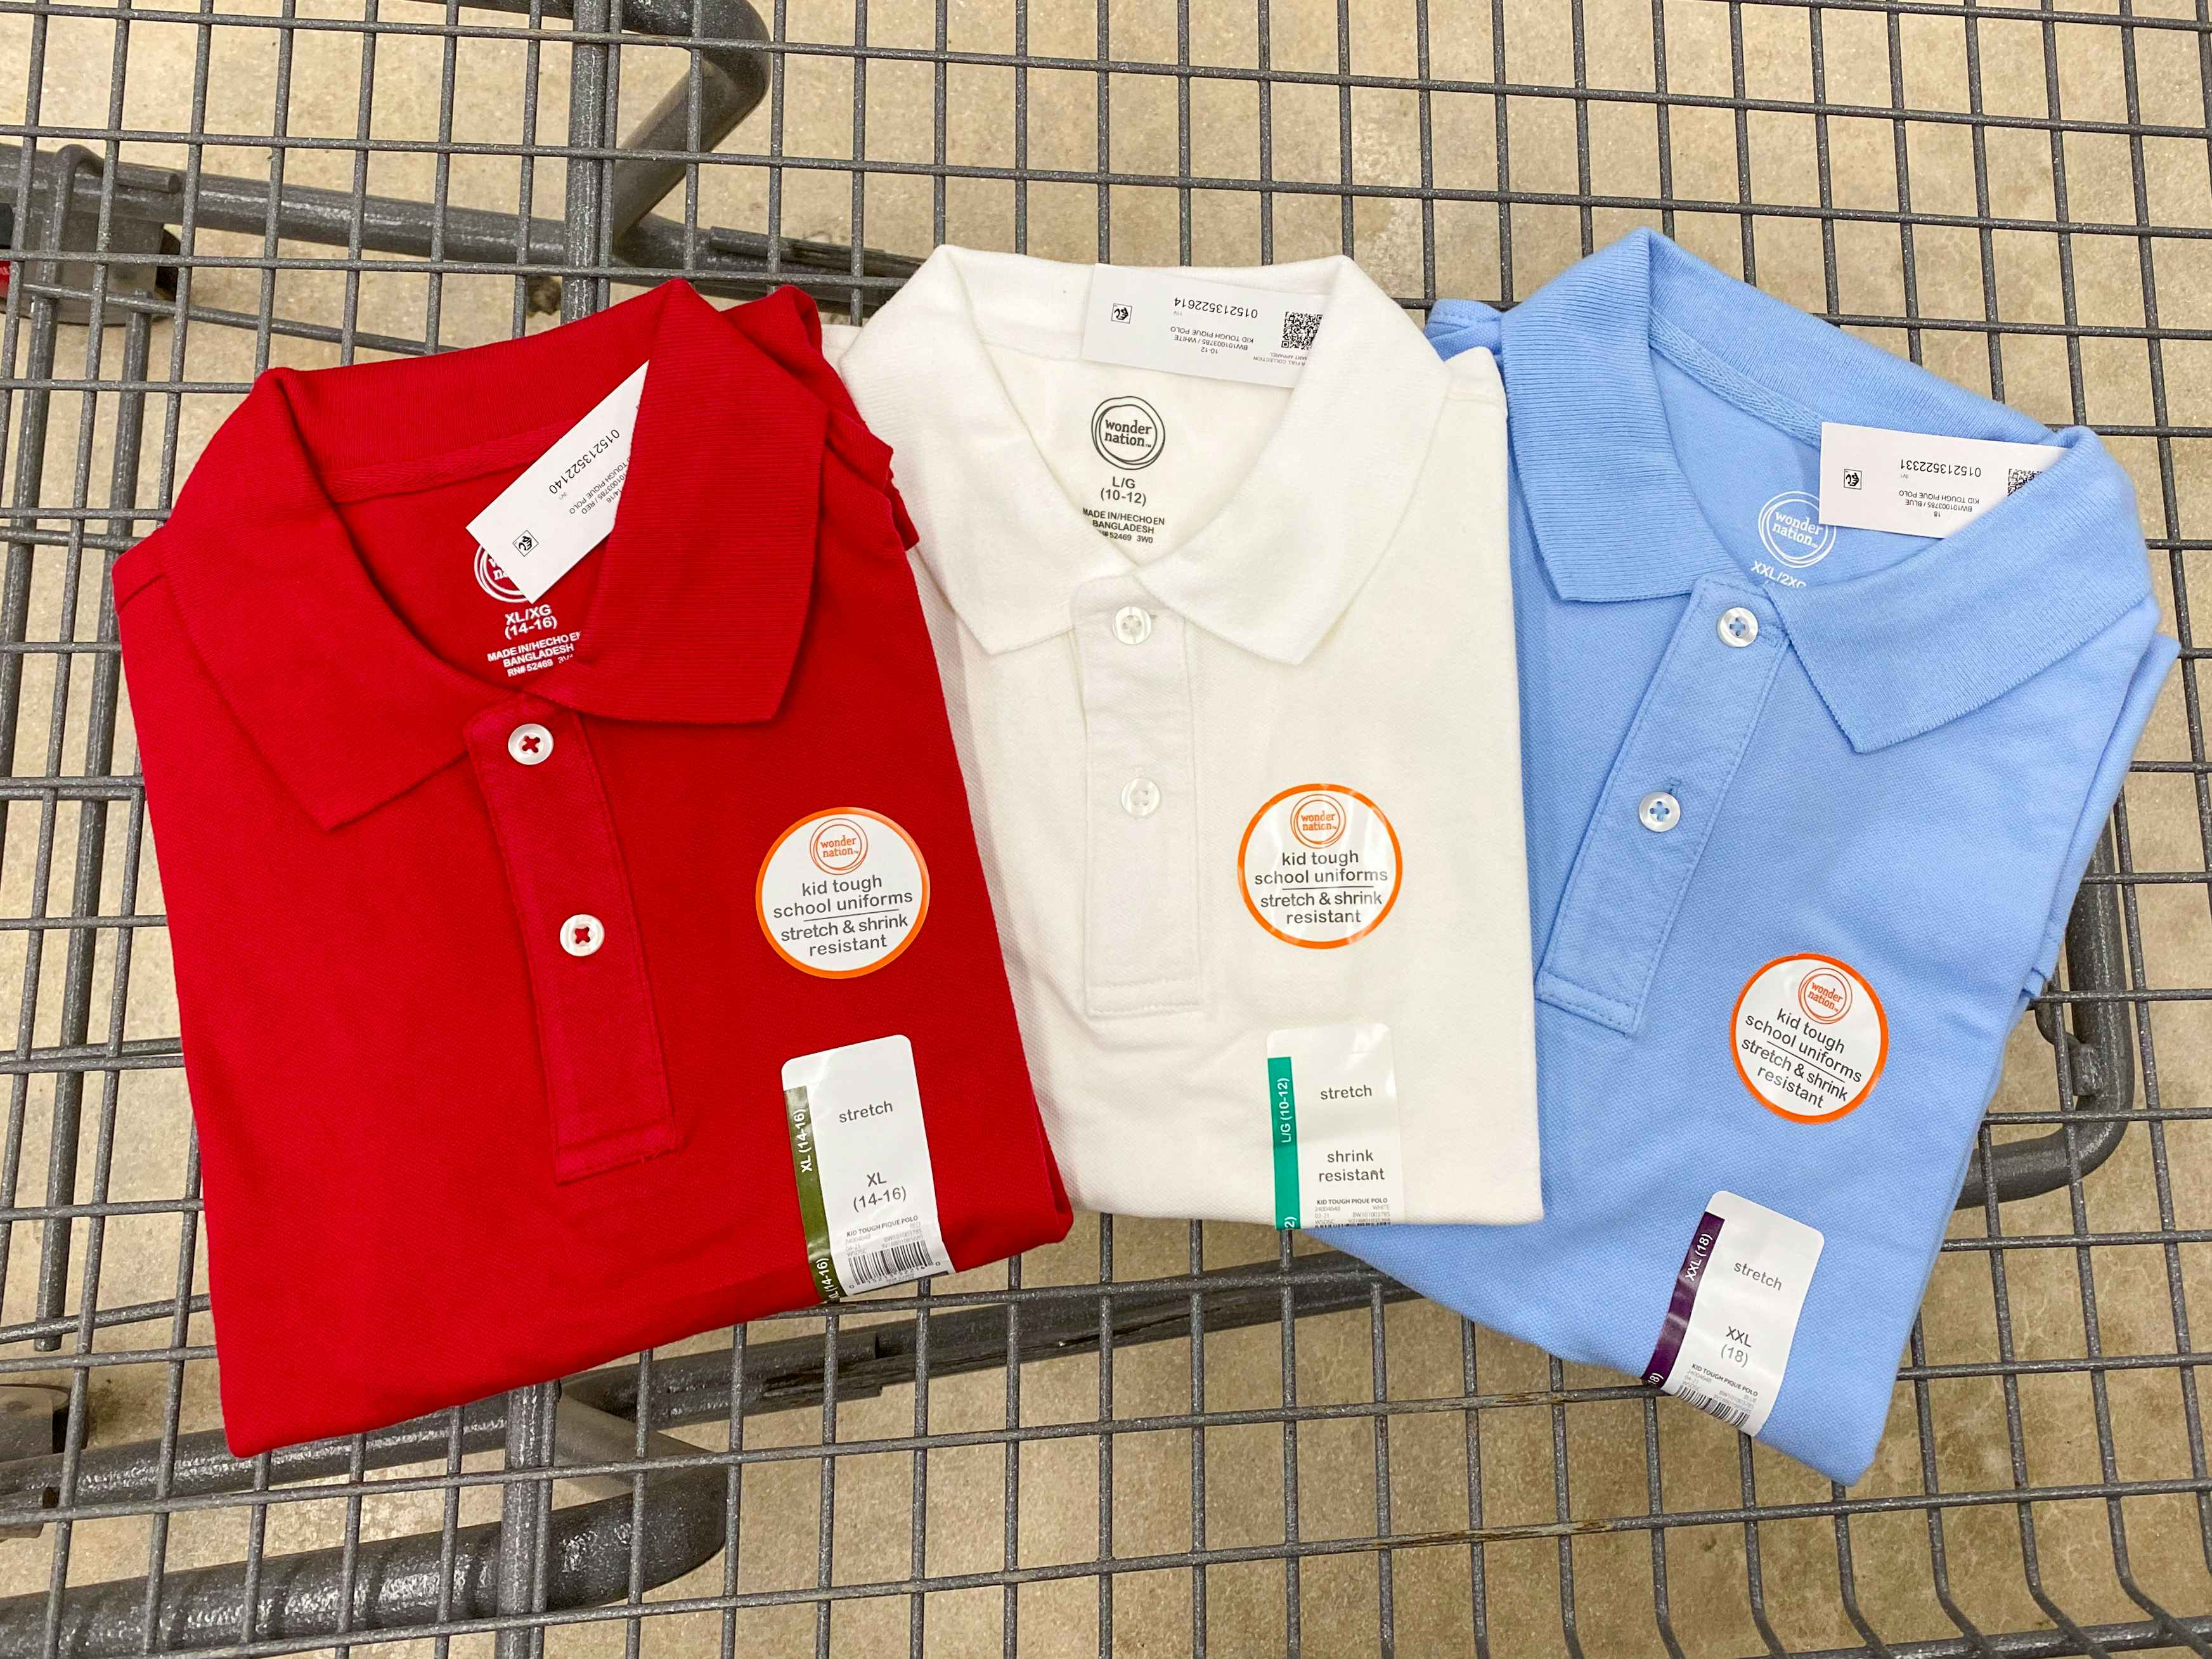 Three different colored children's school uniform shirts in a Walmart shopping cart.